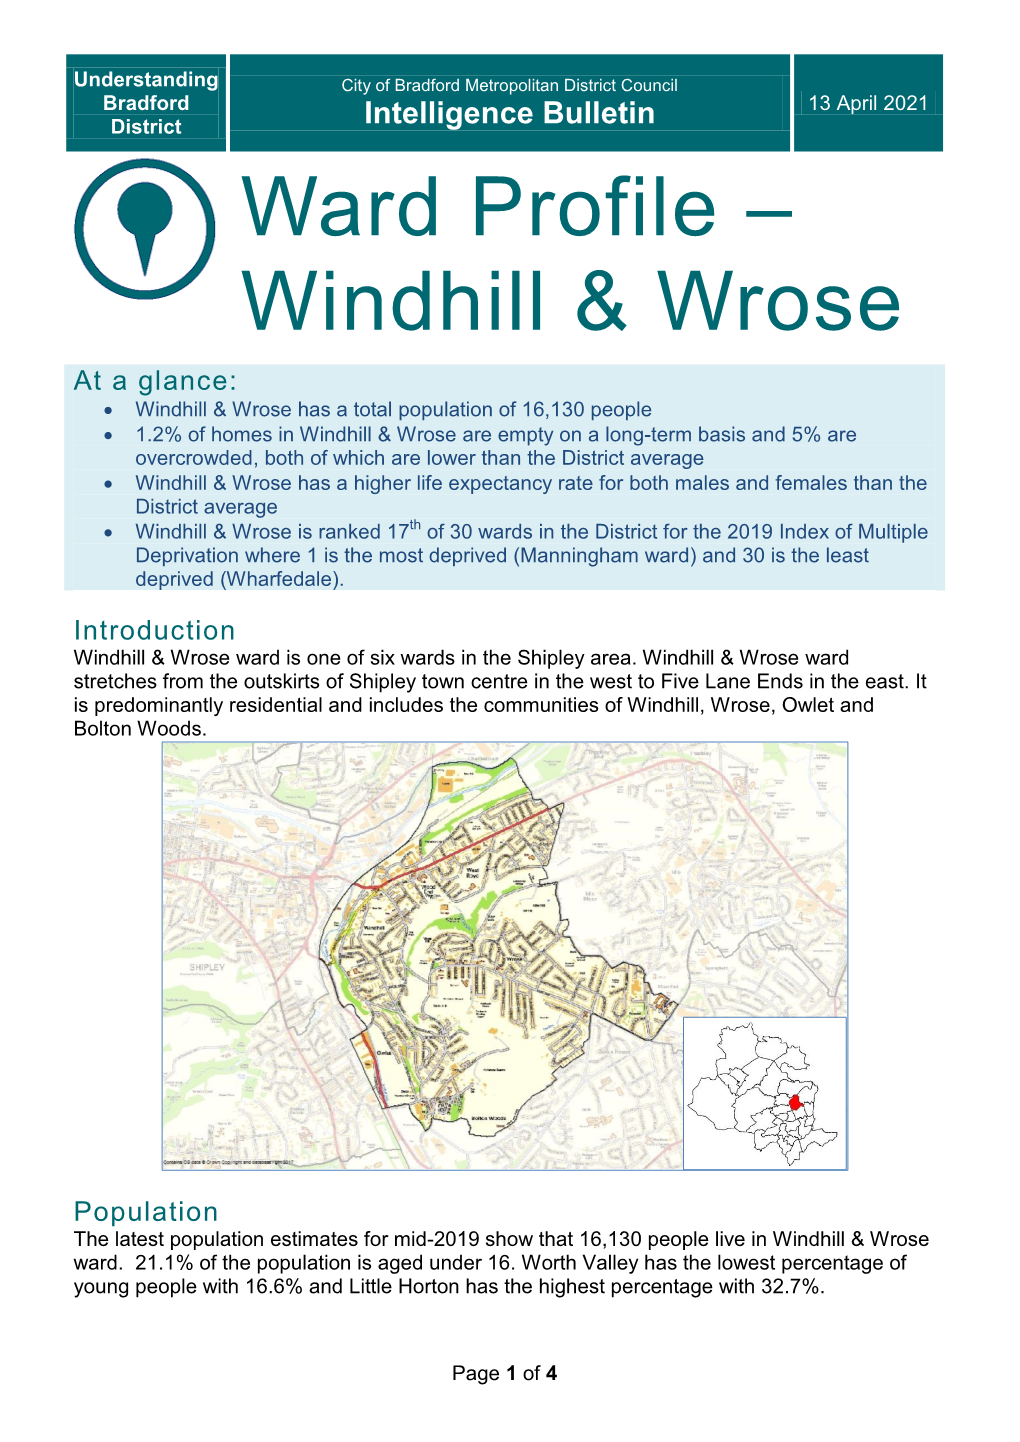 Windhill & Wrose